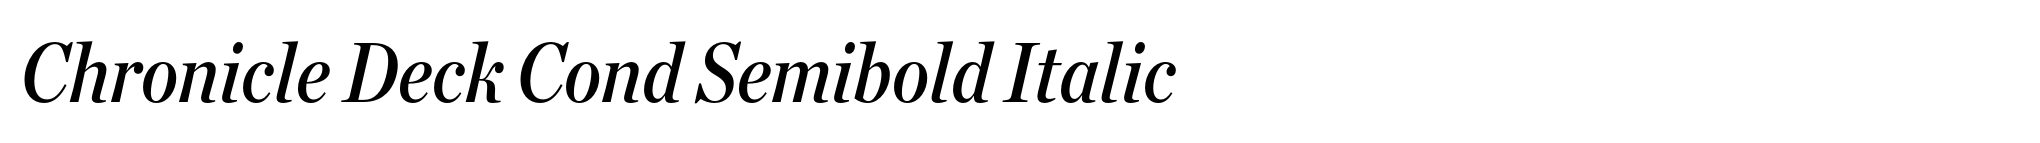 Chronicle Deck Cond Semibold Italic image